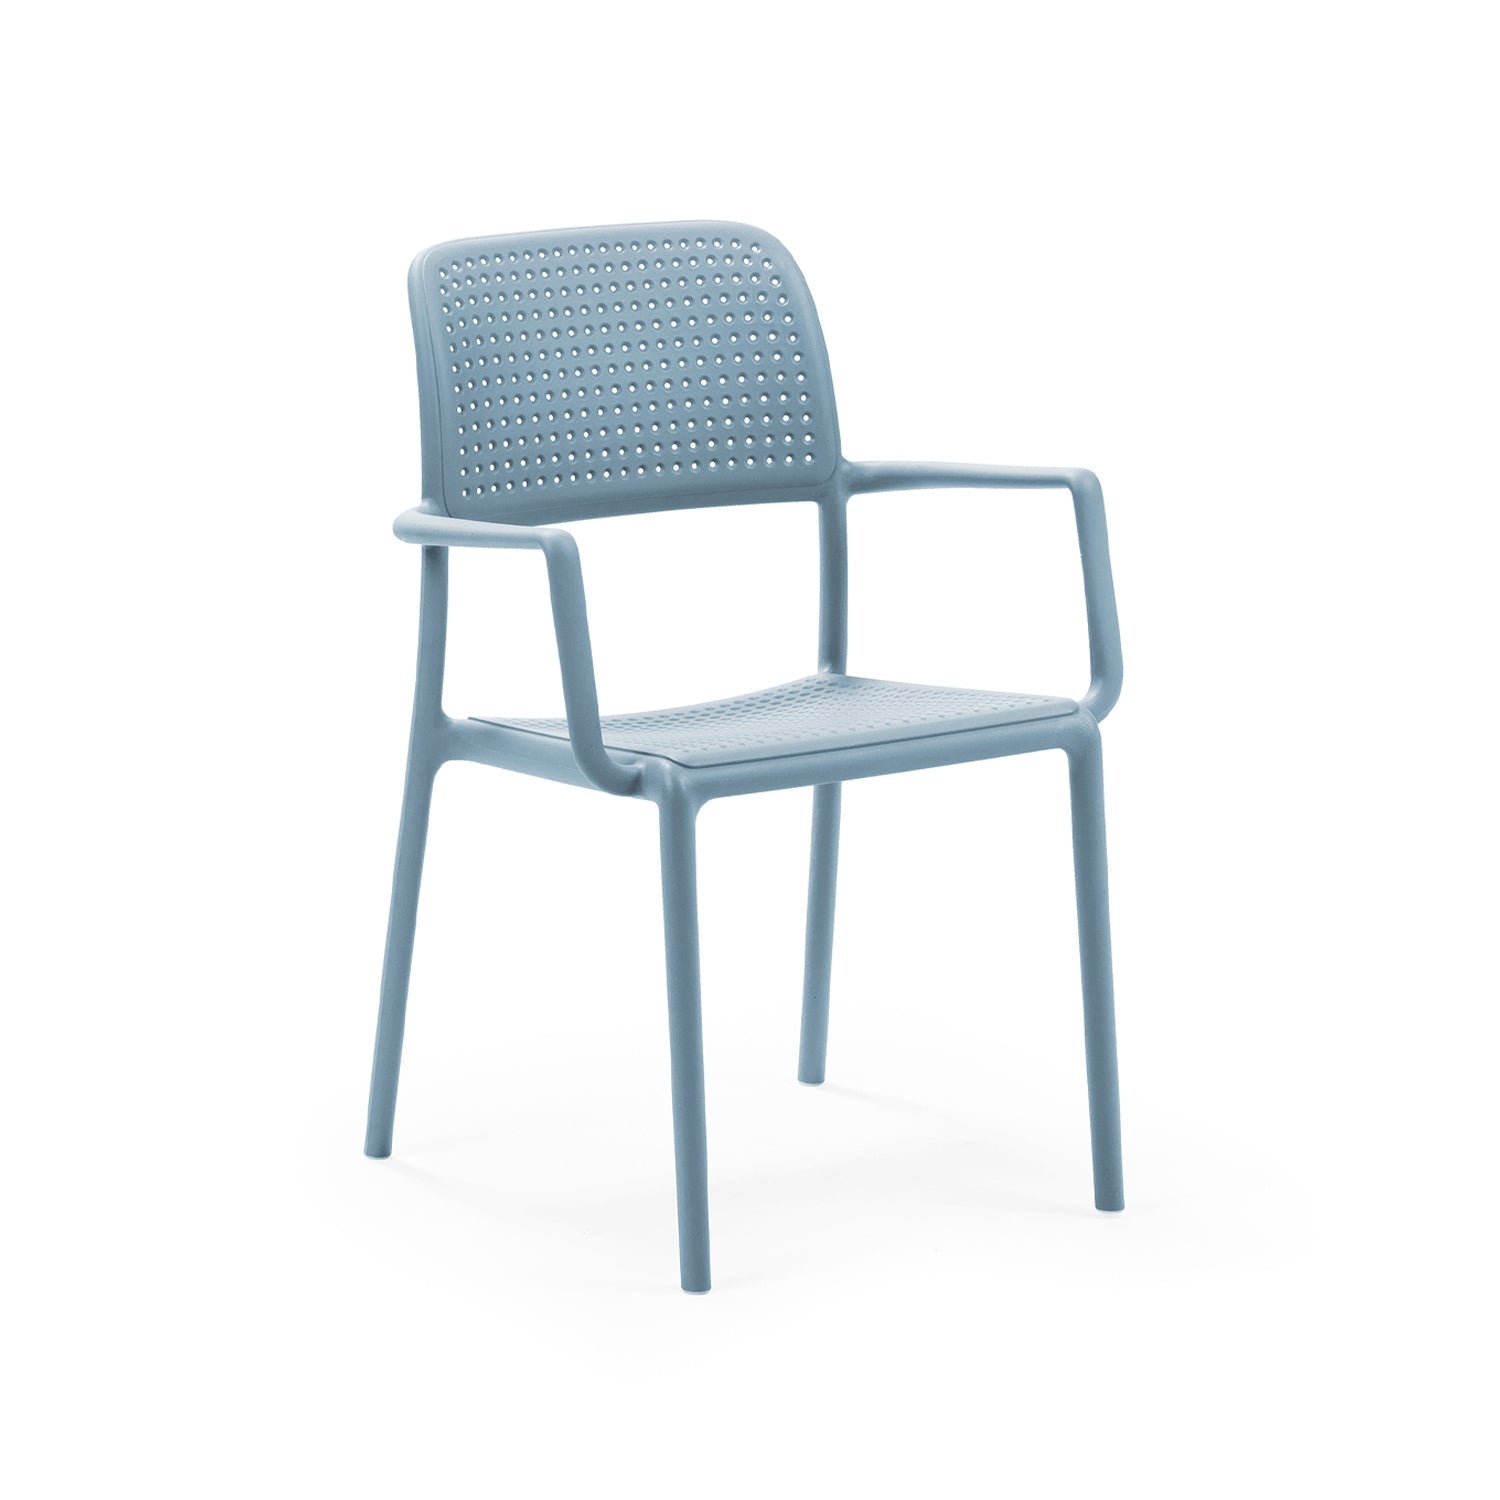 Bora Garden Chair By Nardi In Powder Blue